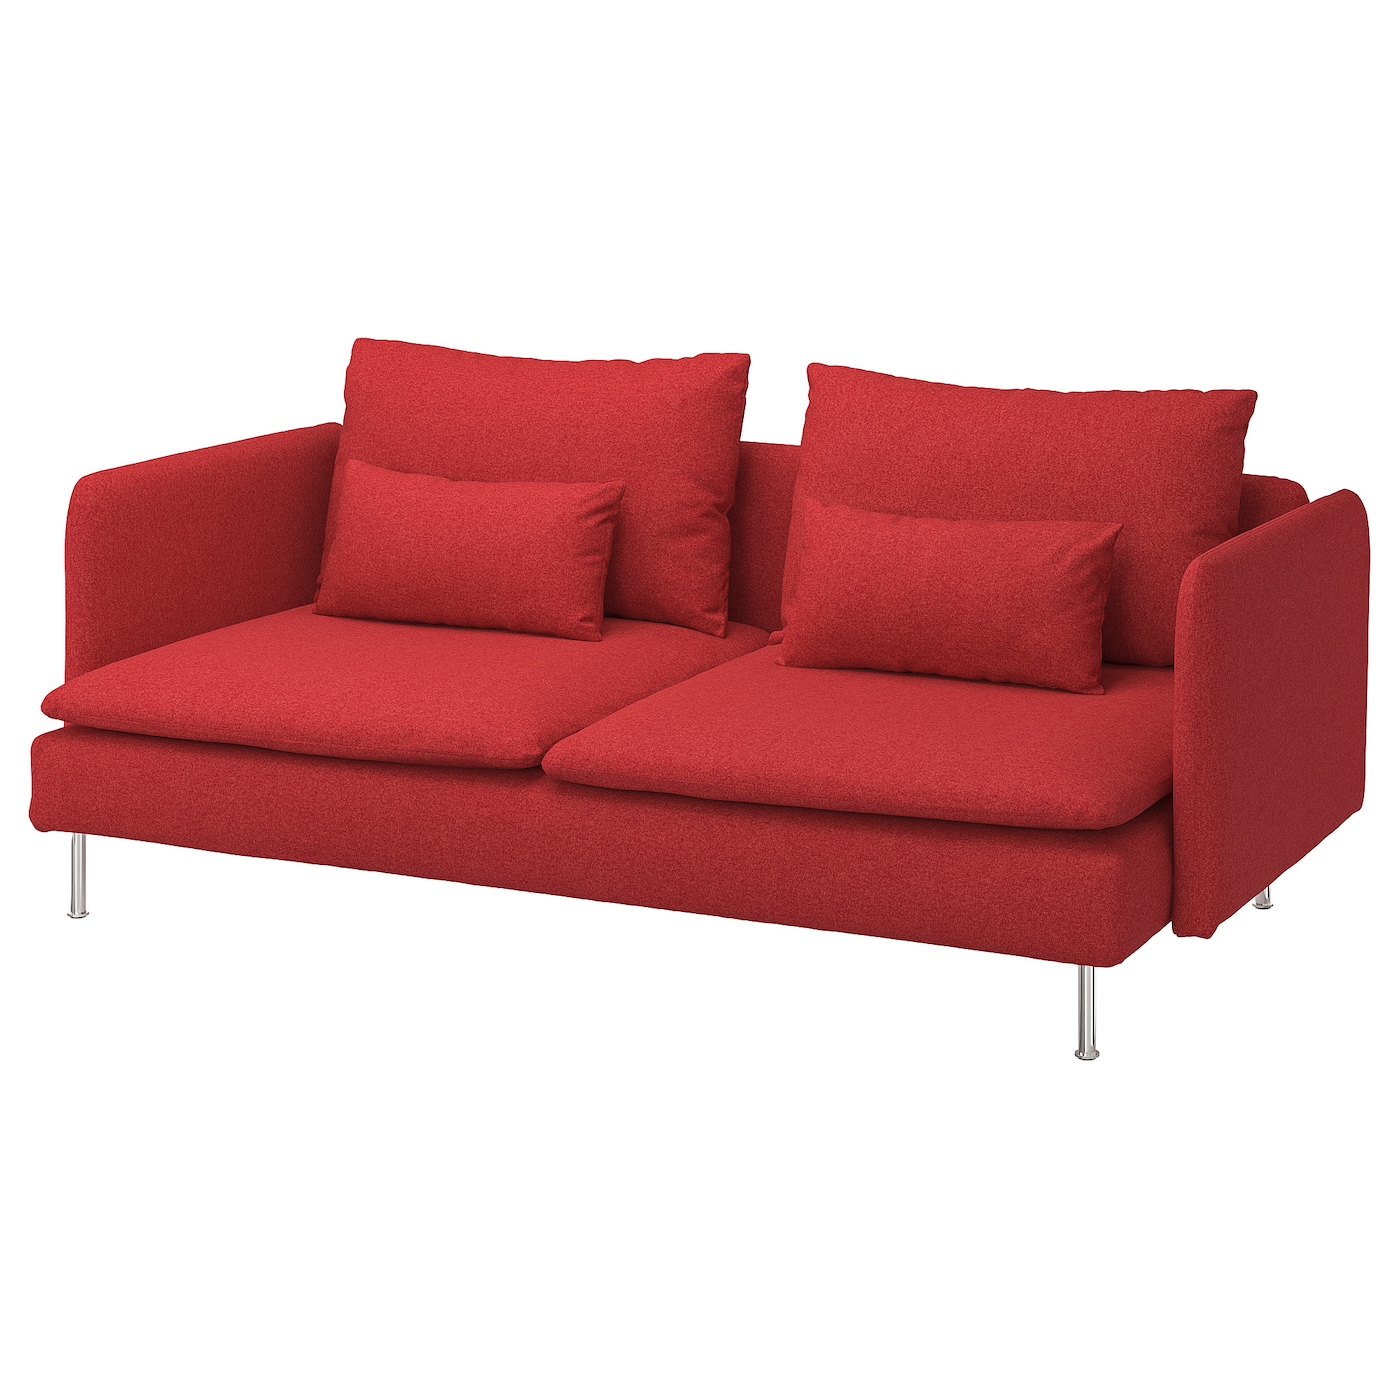 3-местный диван - IKEA SÖDERHAMN/SODERHAMN/СЁДЕРХАМН ИКЕА, 83х69х198 см, красный